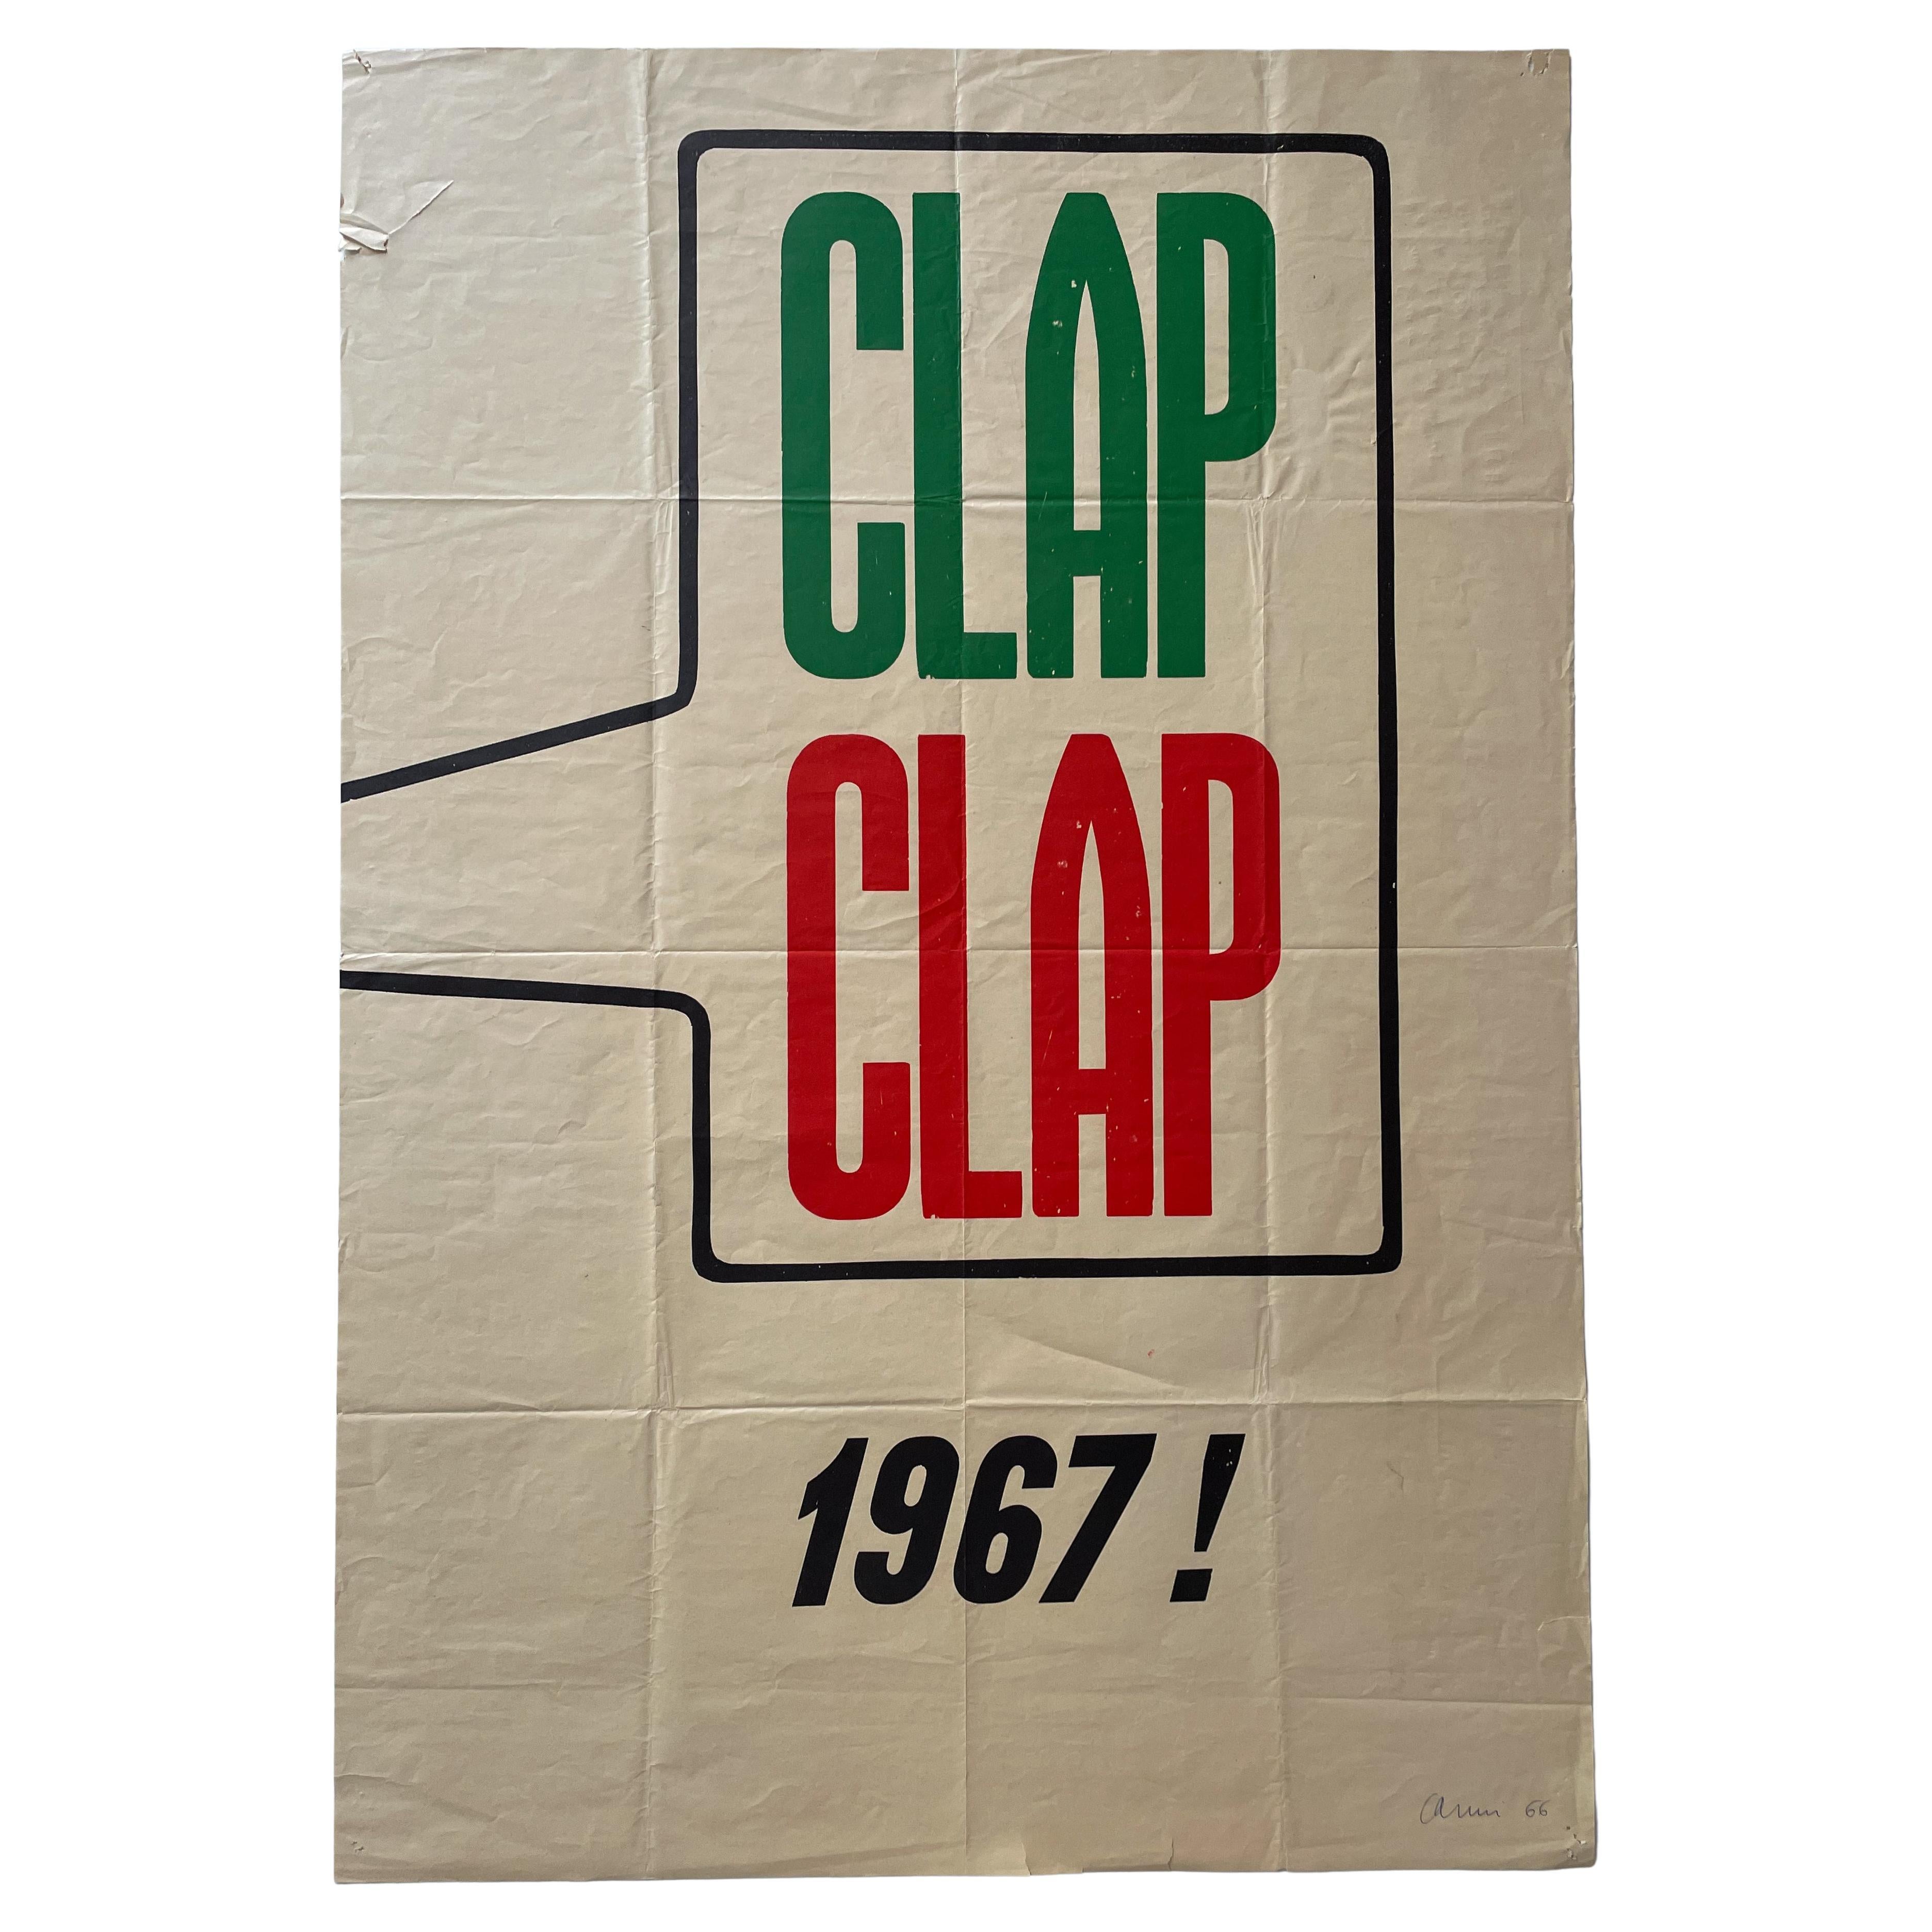 Eugenio Carmi Serigraph "CLAP CLAP"